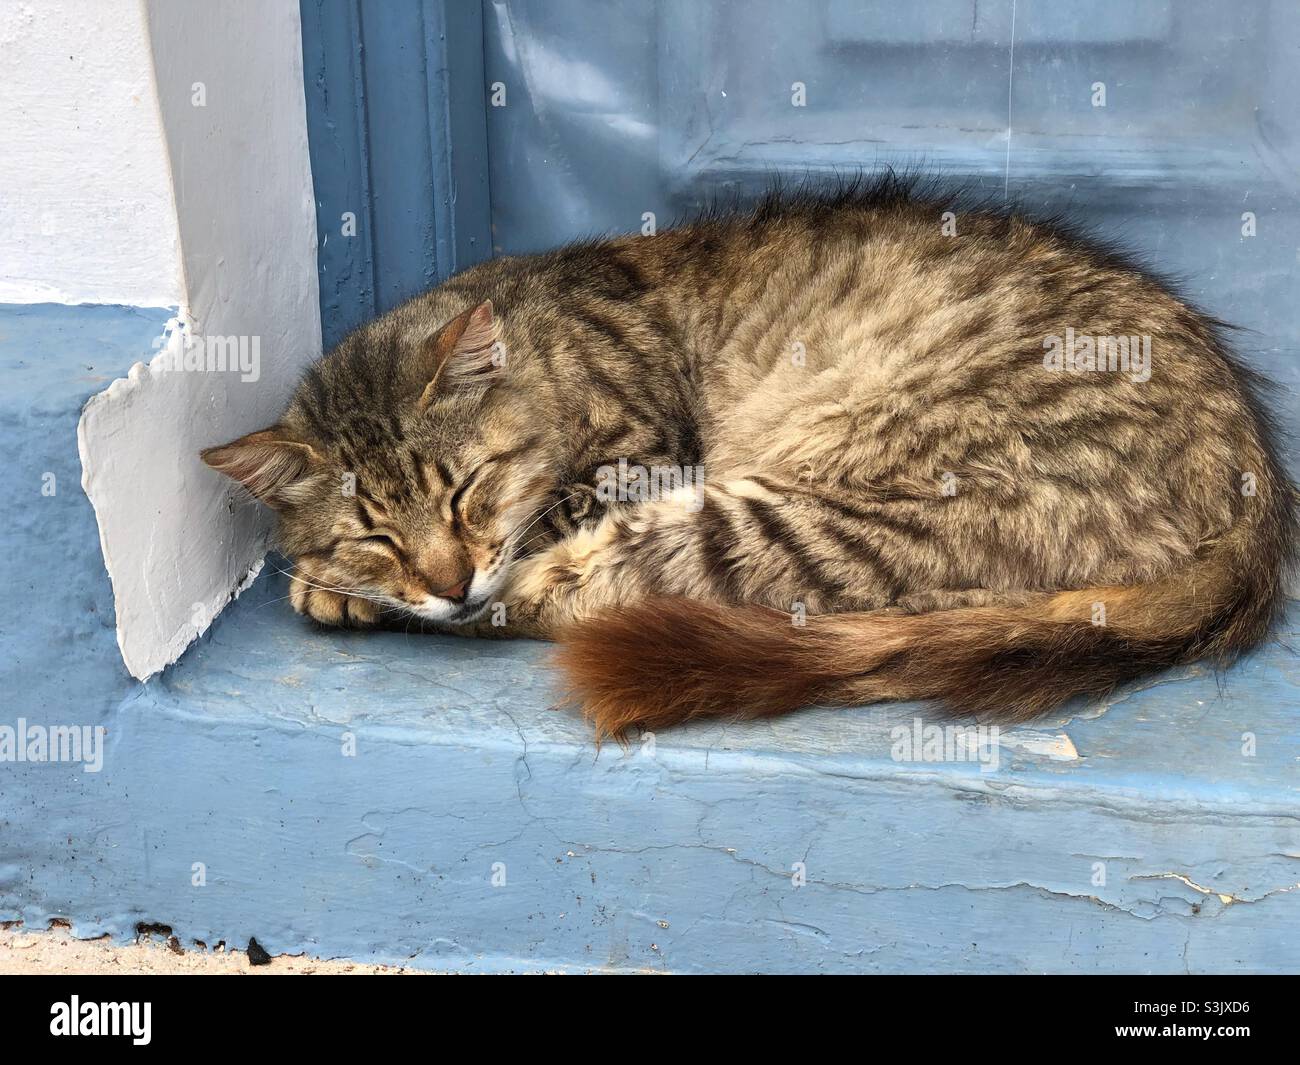 Cat Nap Stock Photo